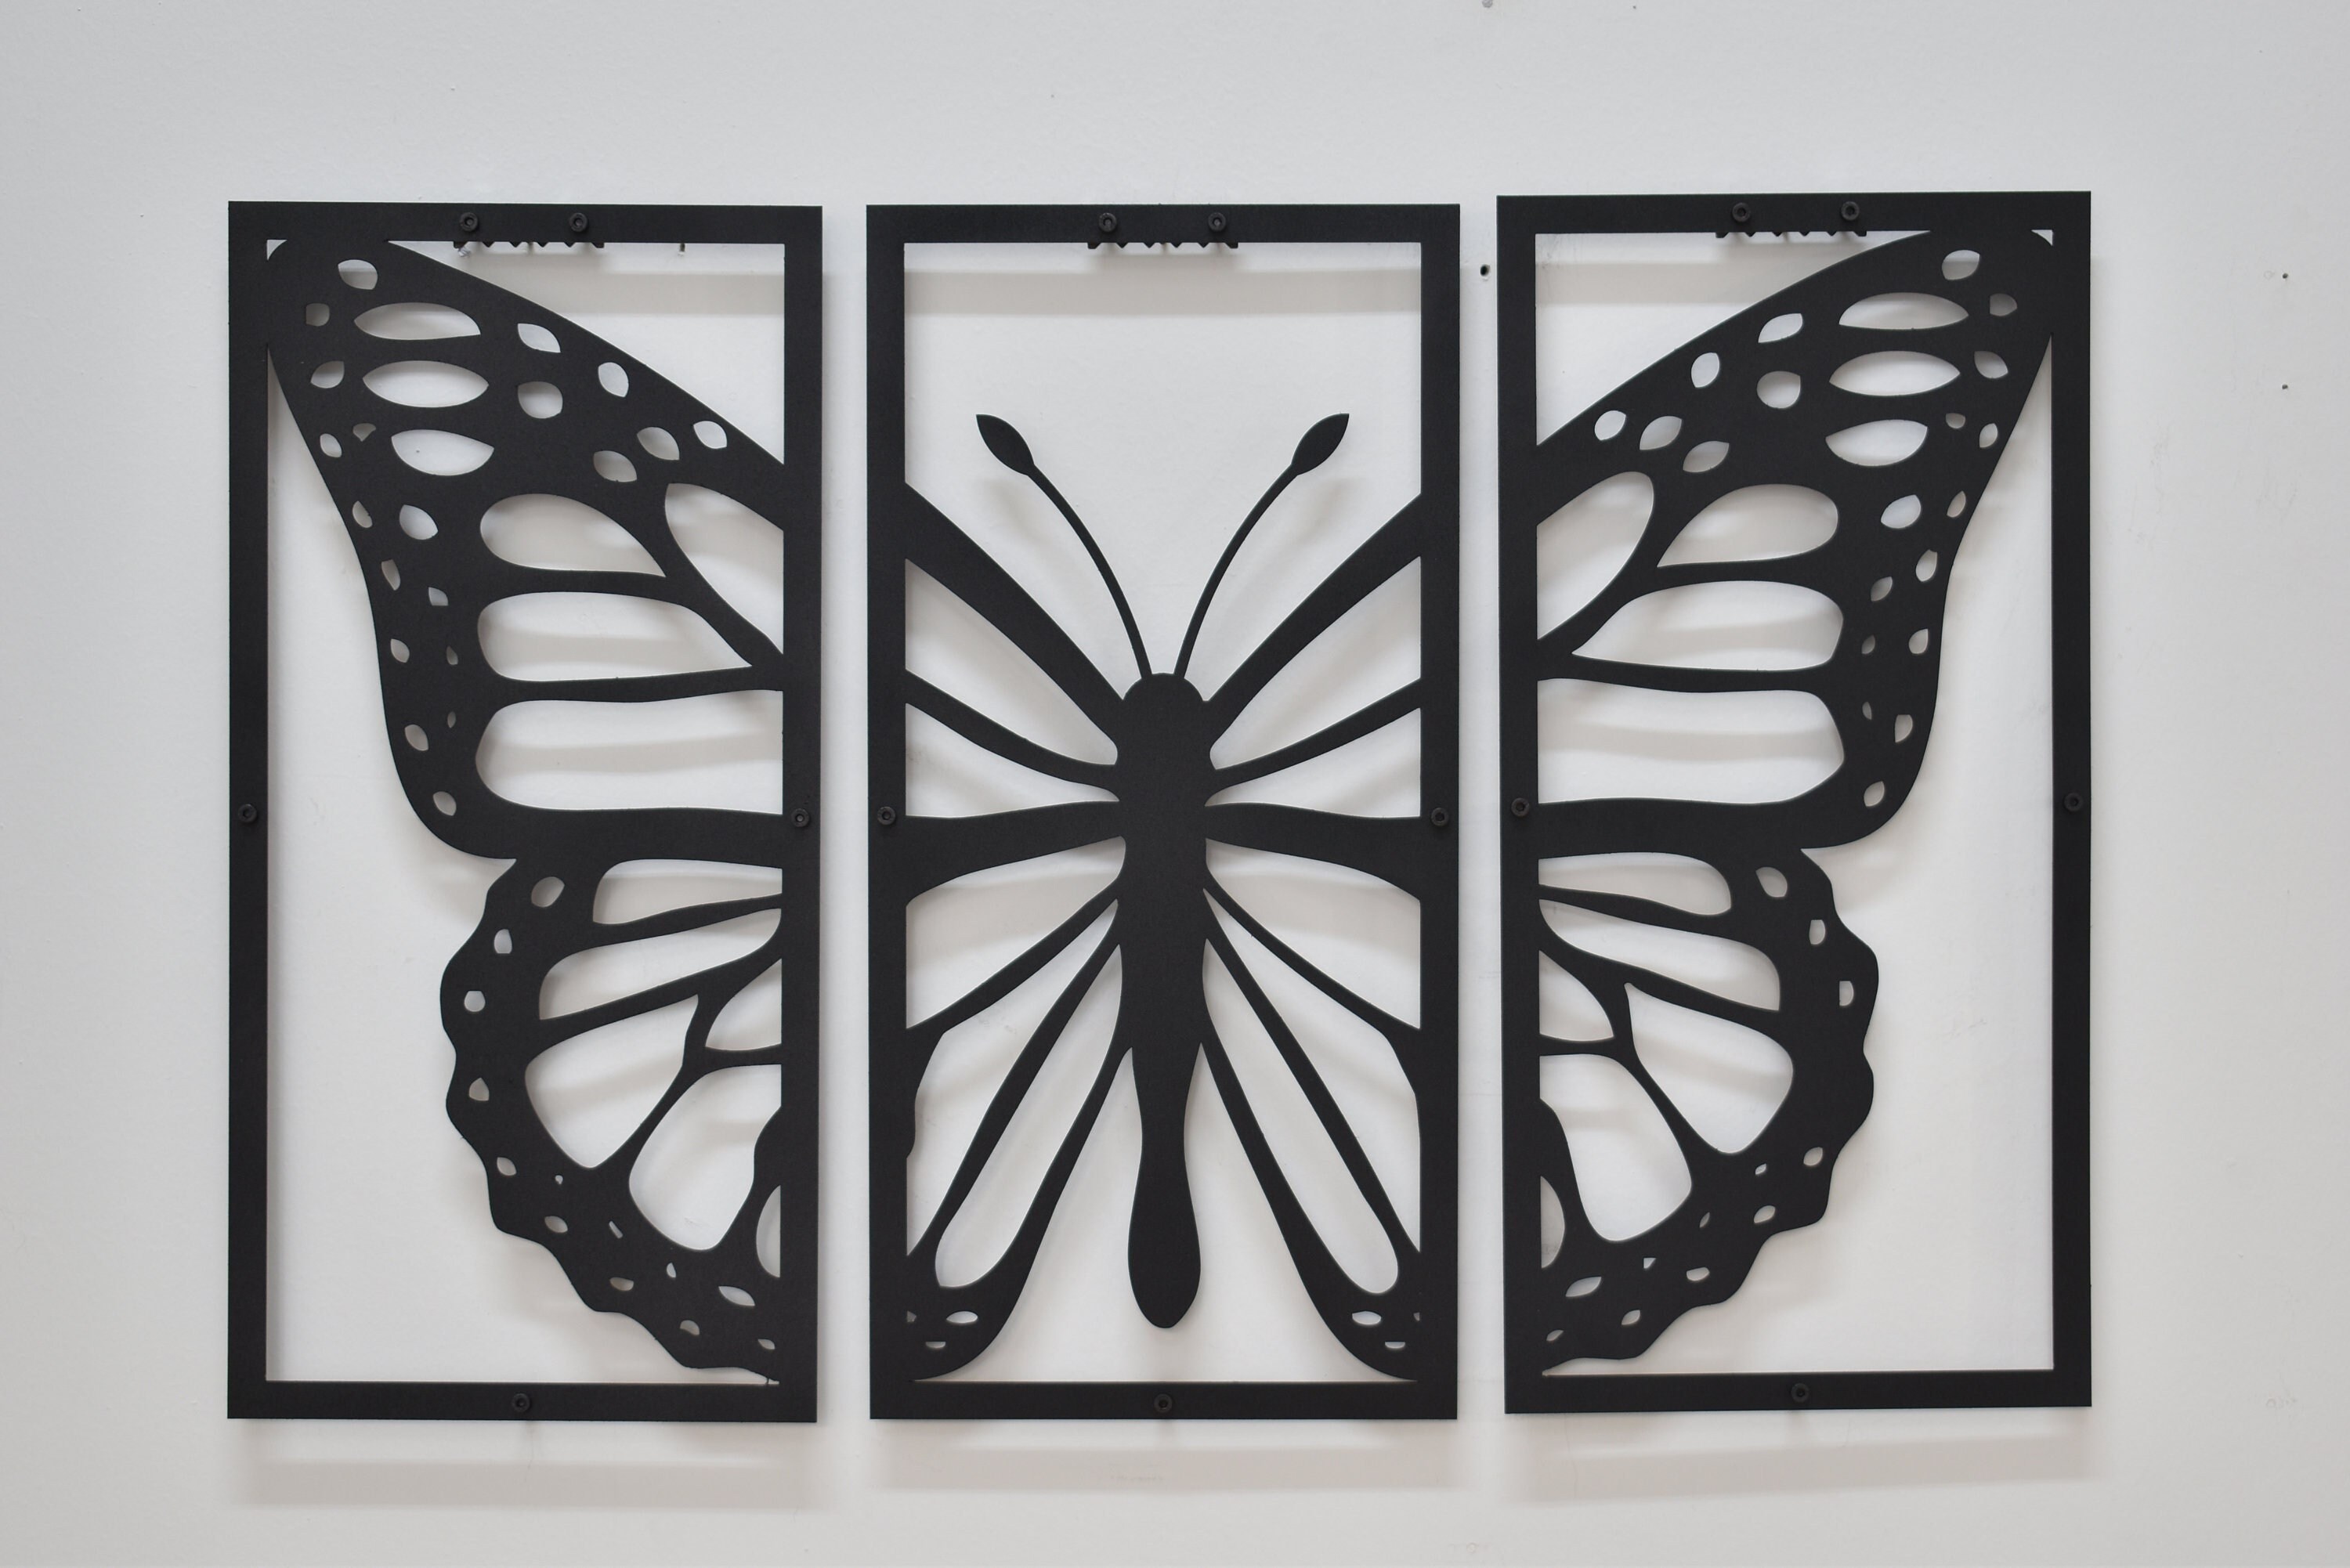 Chirpwood Shadows Multi-Canvas Art Kit: Butterflies